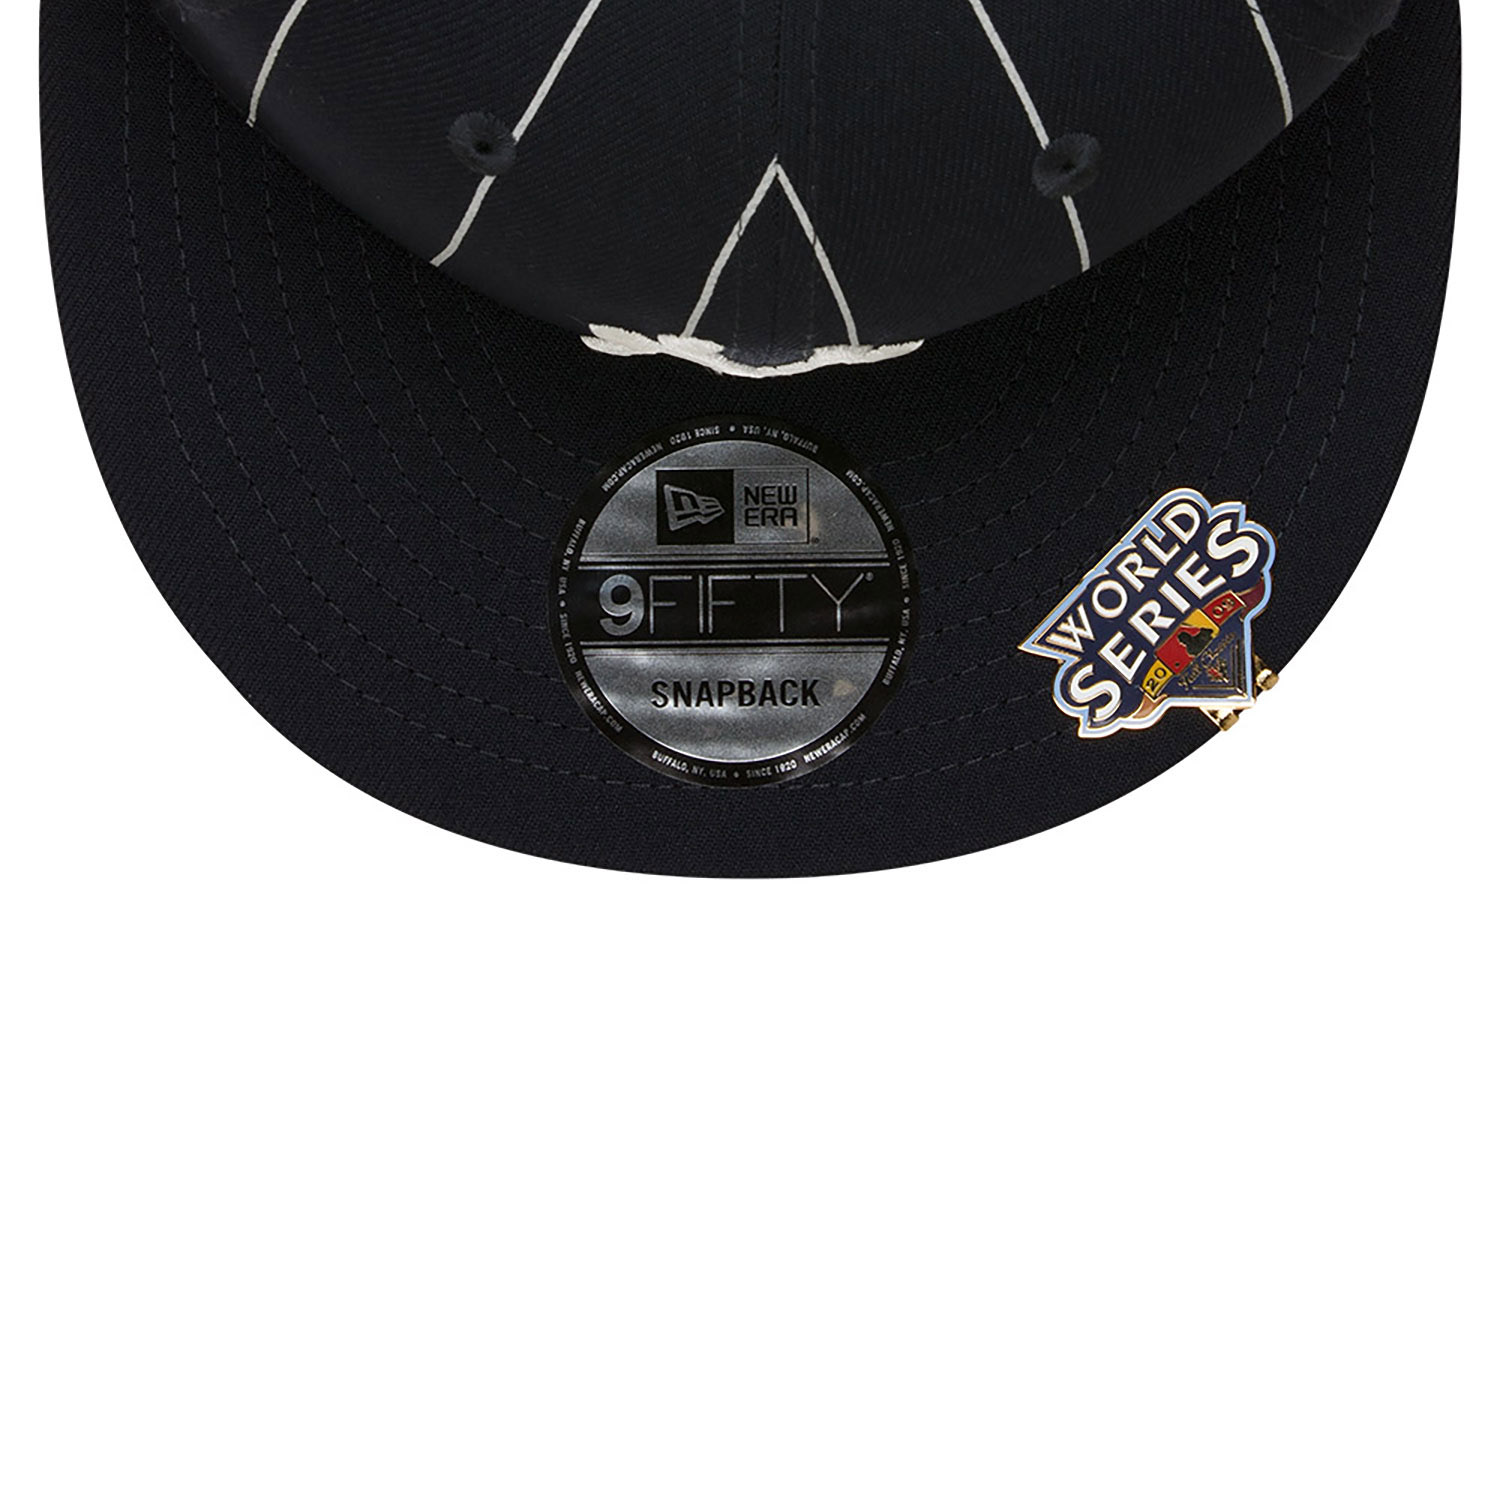 New York Yankees Pinstripe Navy 9FIFTY Snapback Cap